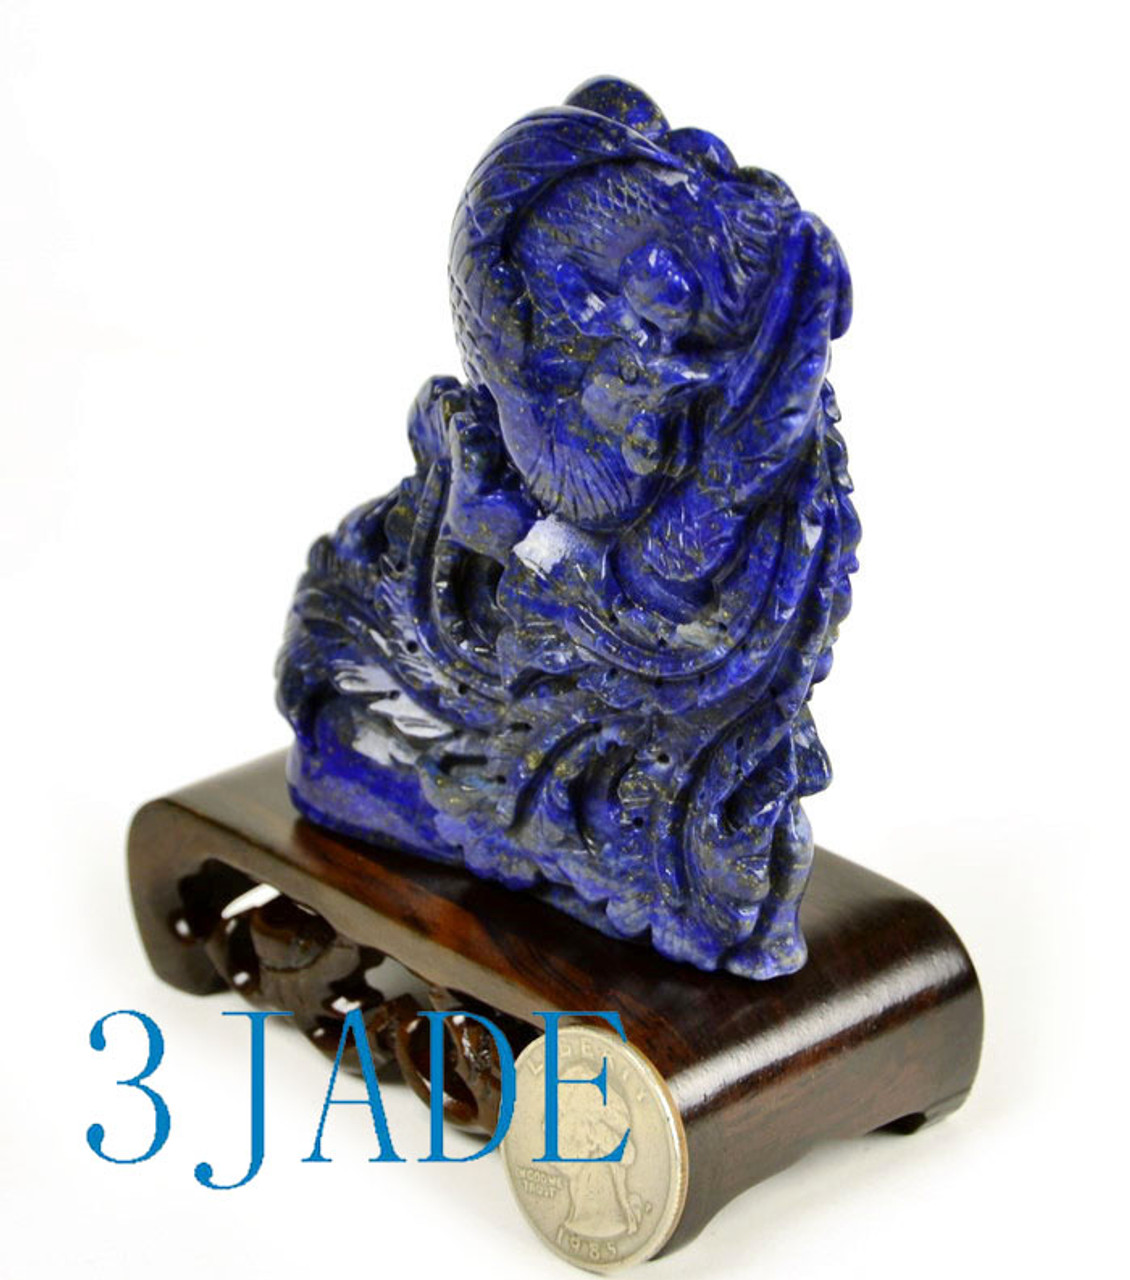 Lapis Lazuli Carving